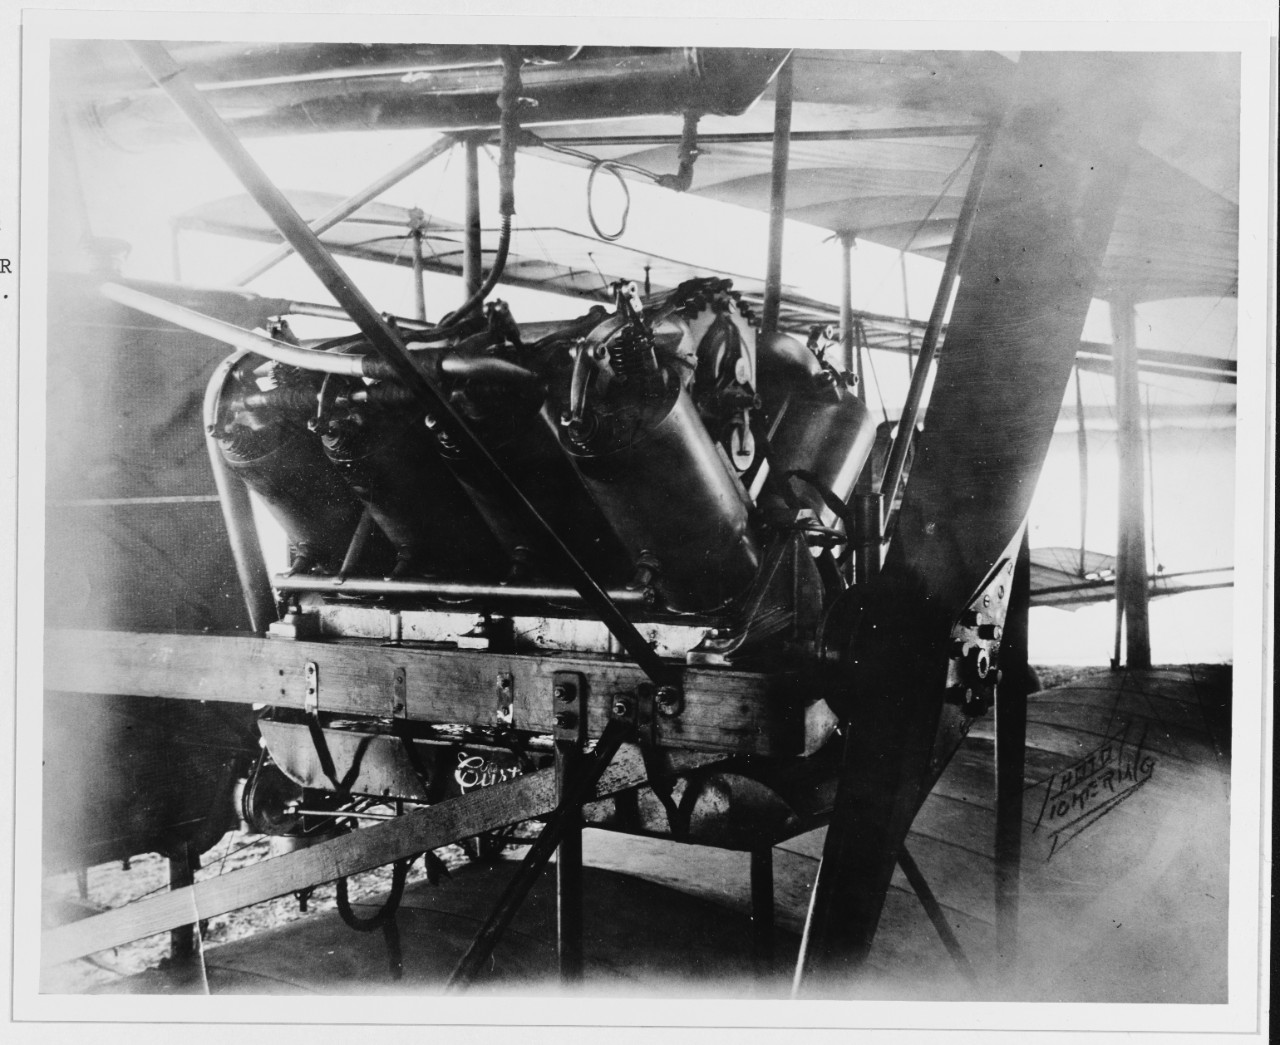 Curtiss's pusher aircraft engine